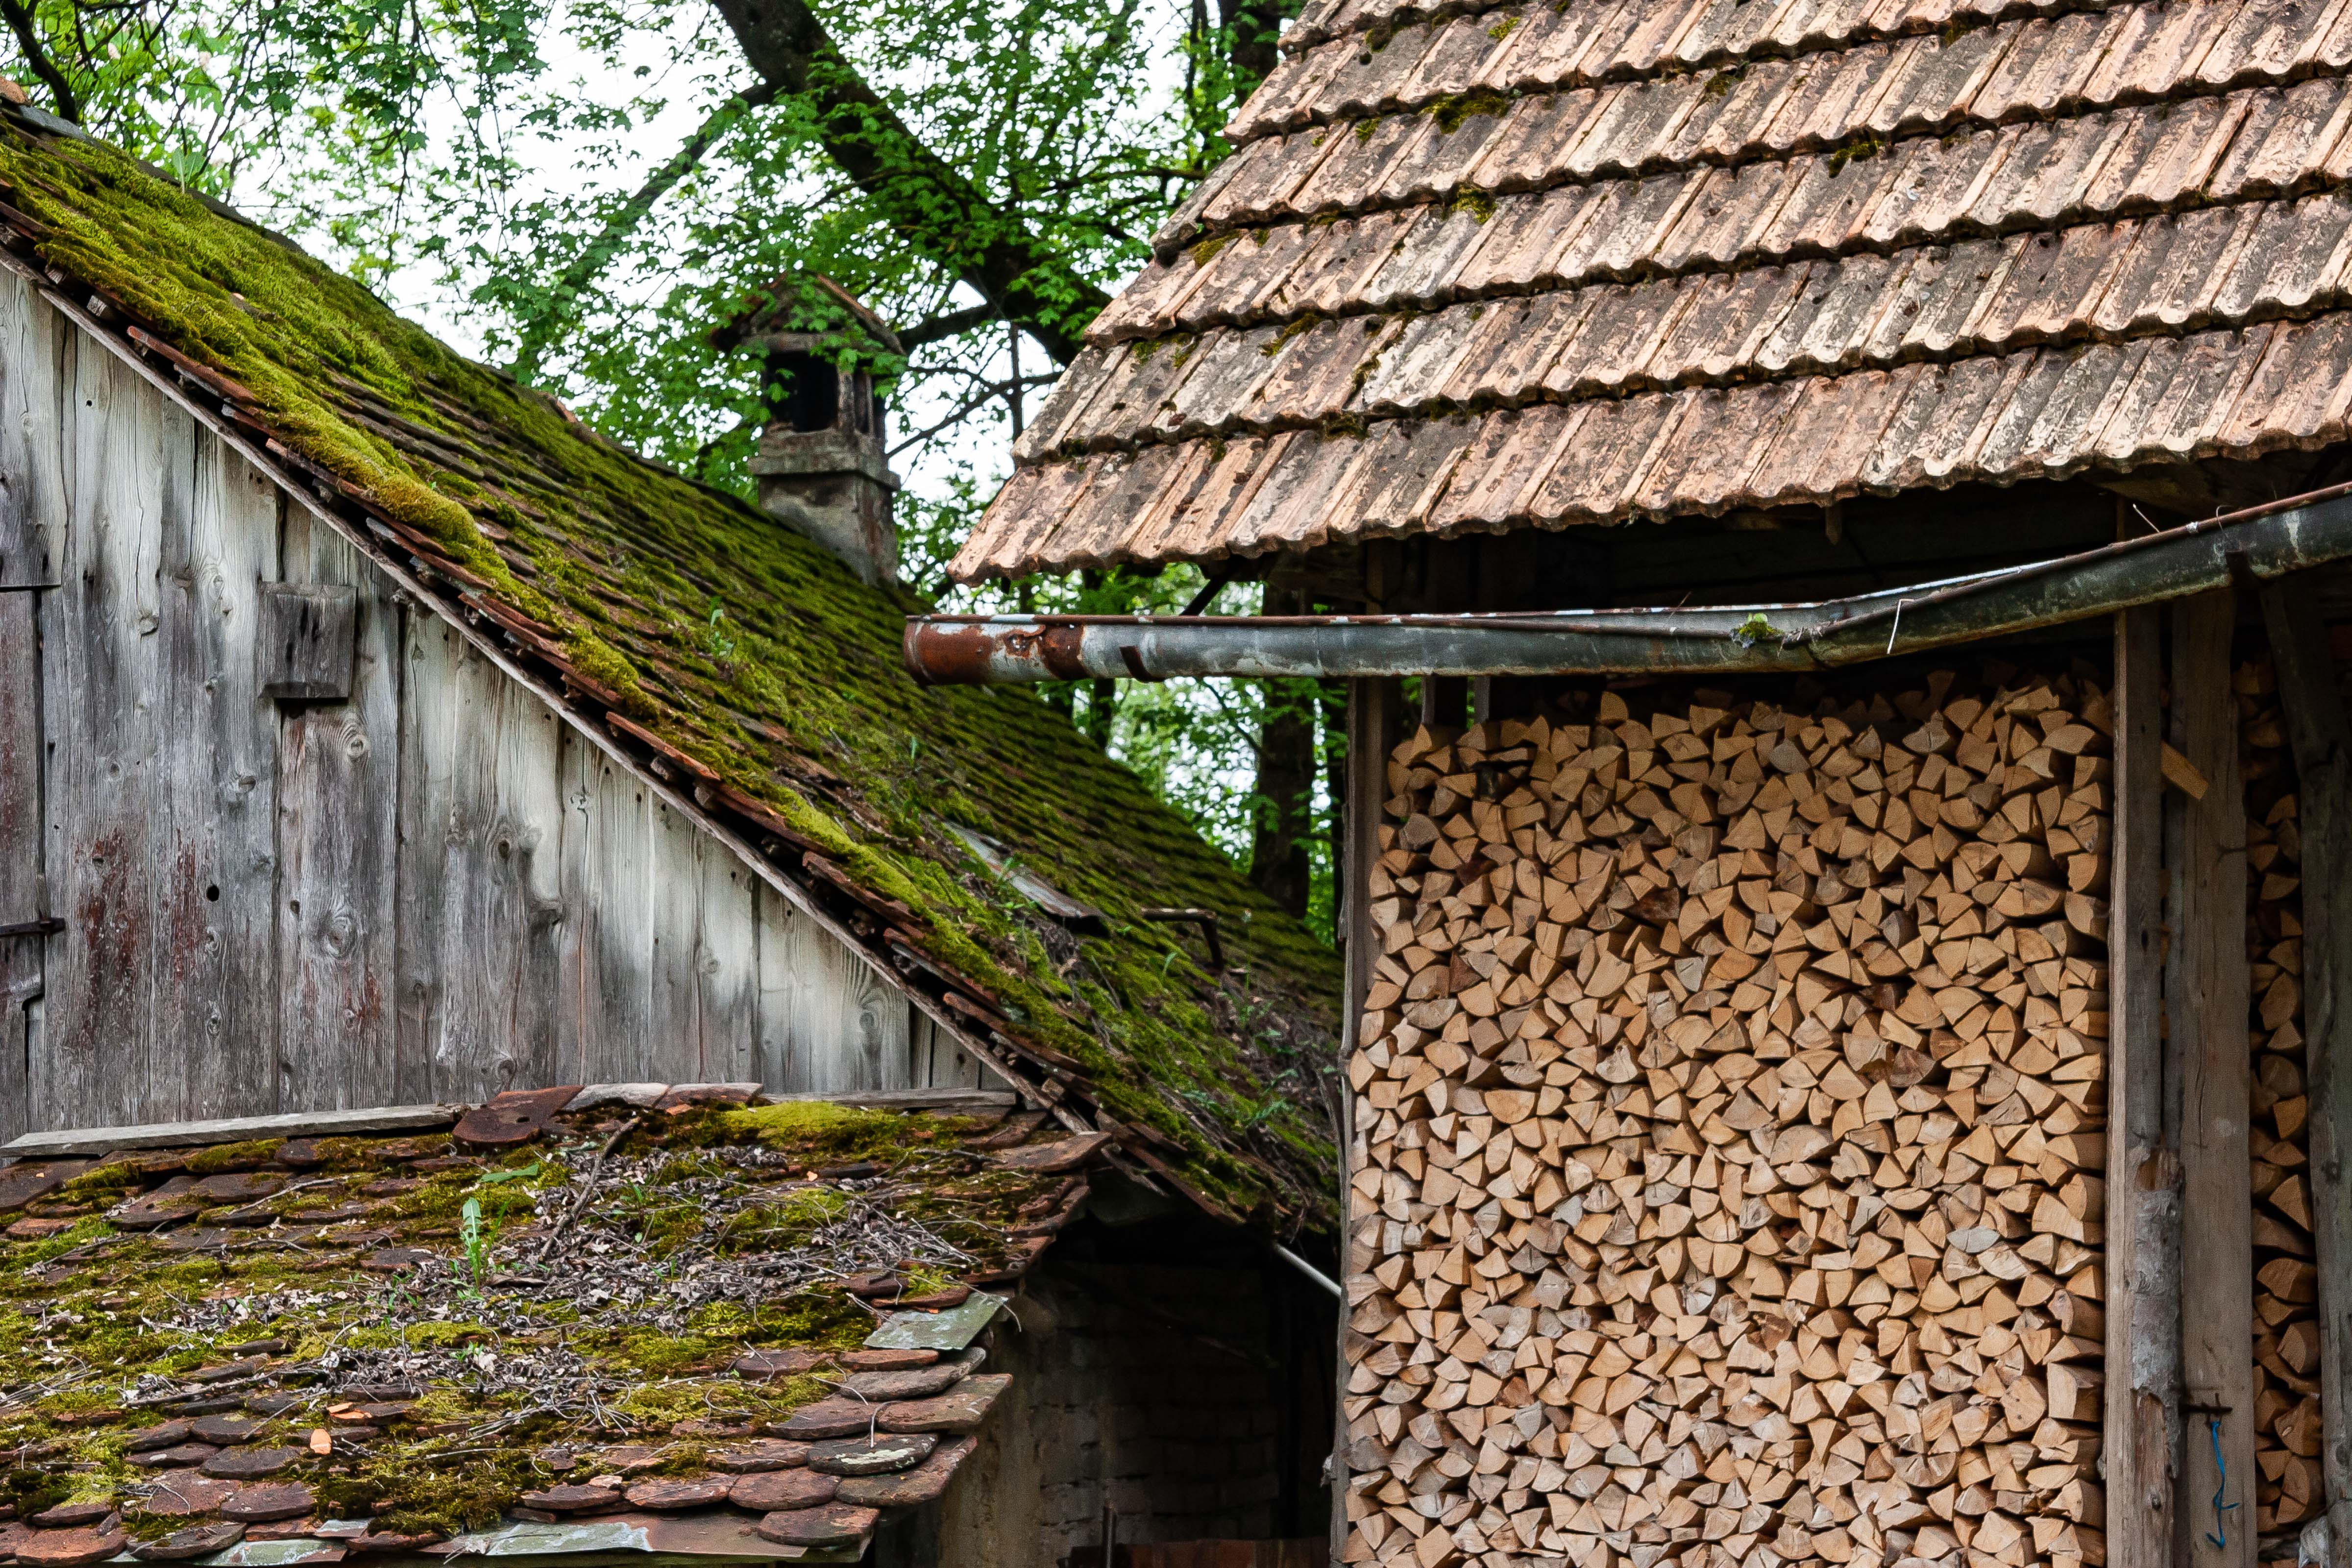 Slovenia, Ribnica Prov, Wood Pile And Sheds, 2006, IMG 7154